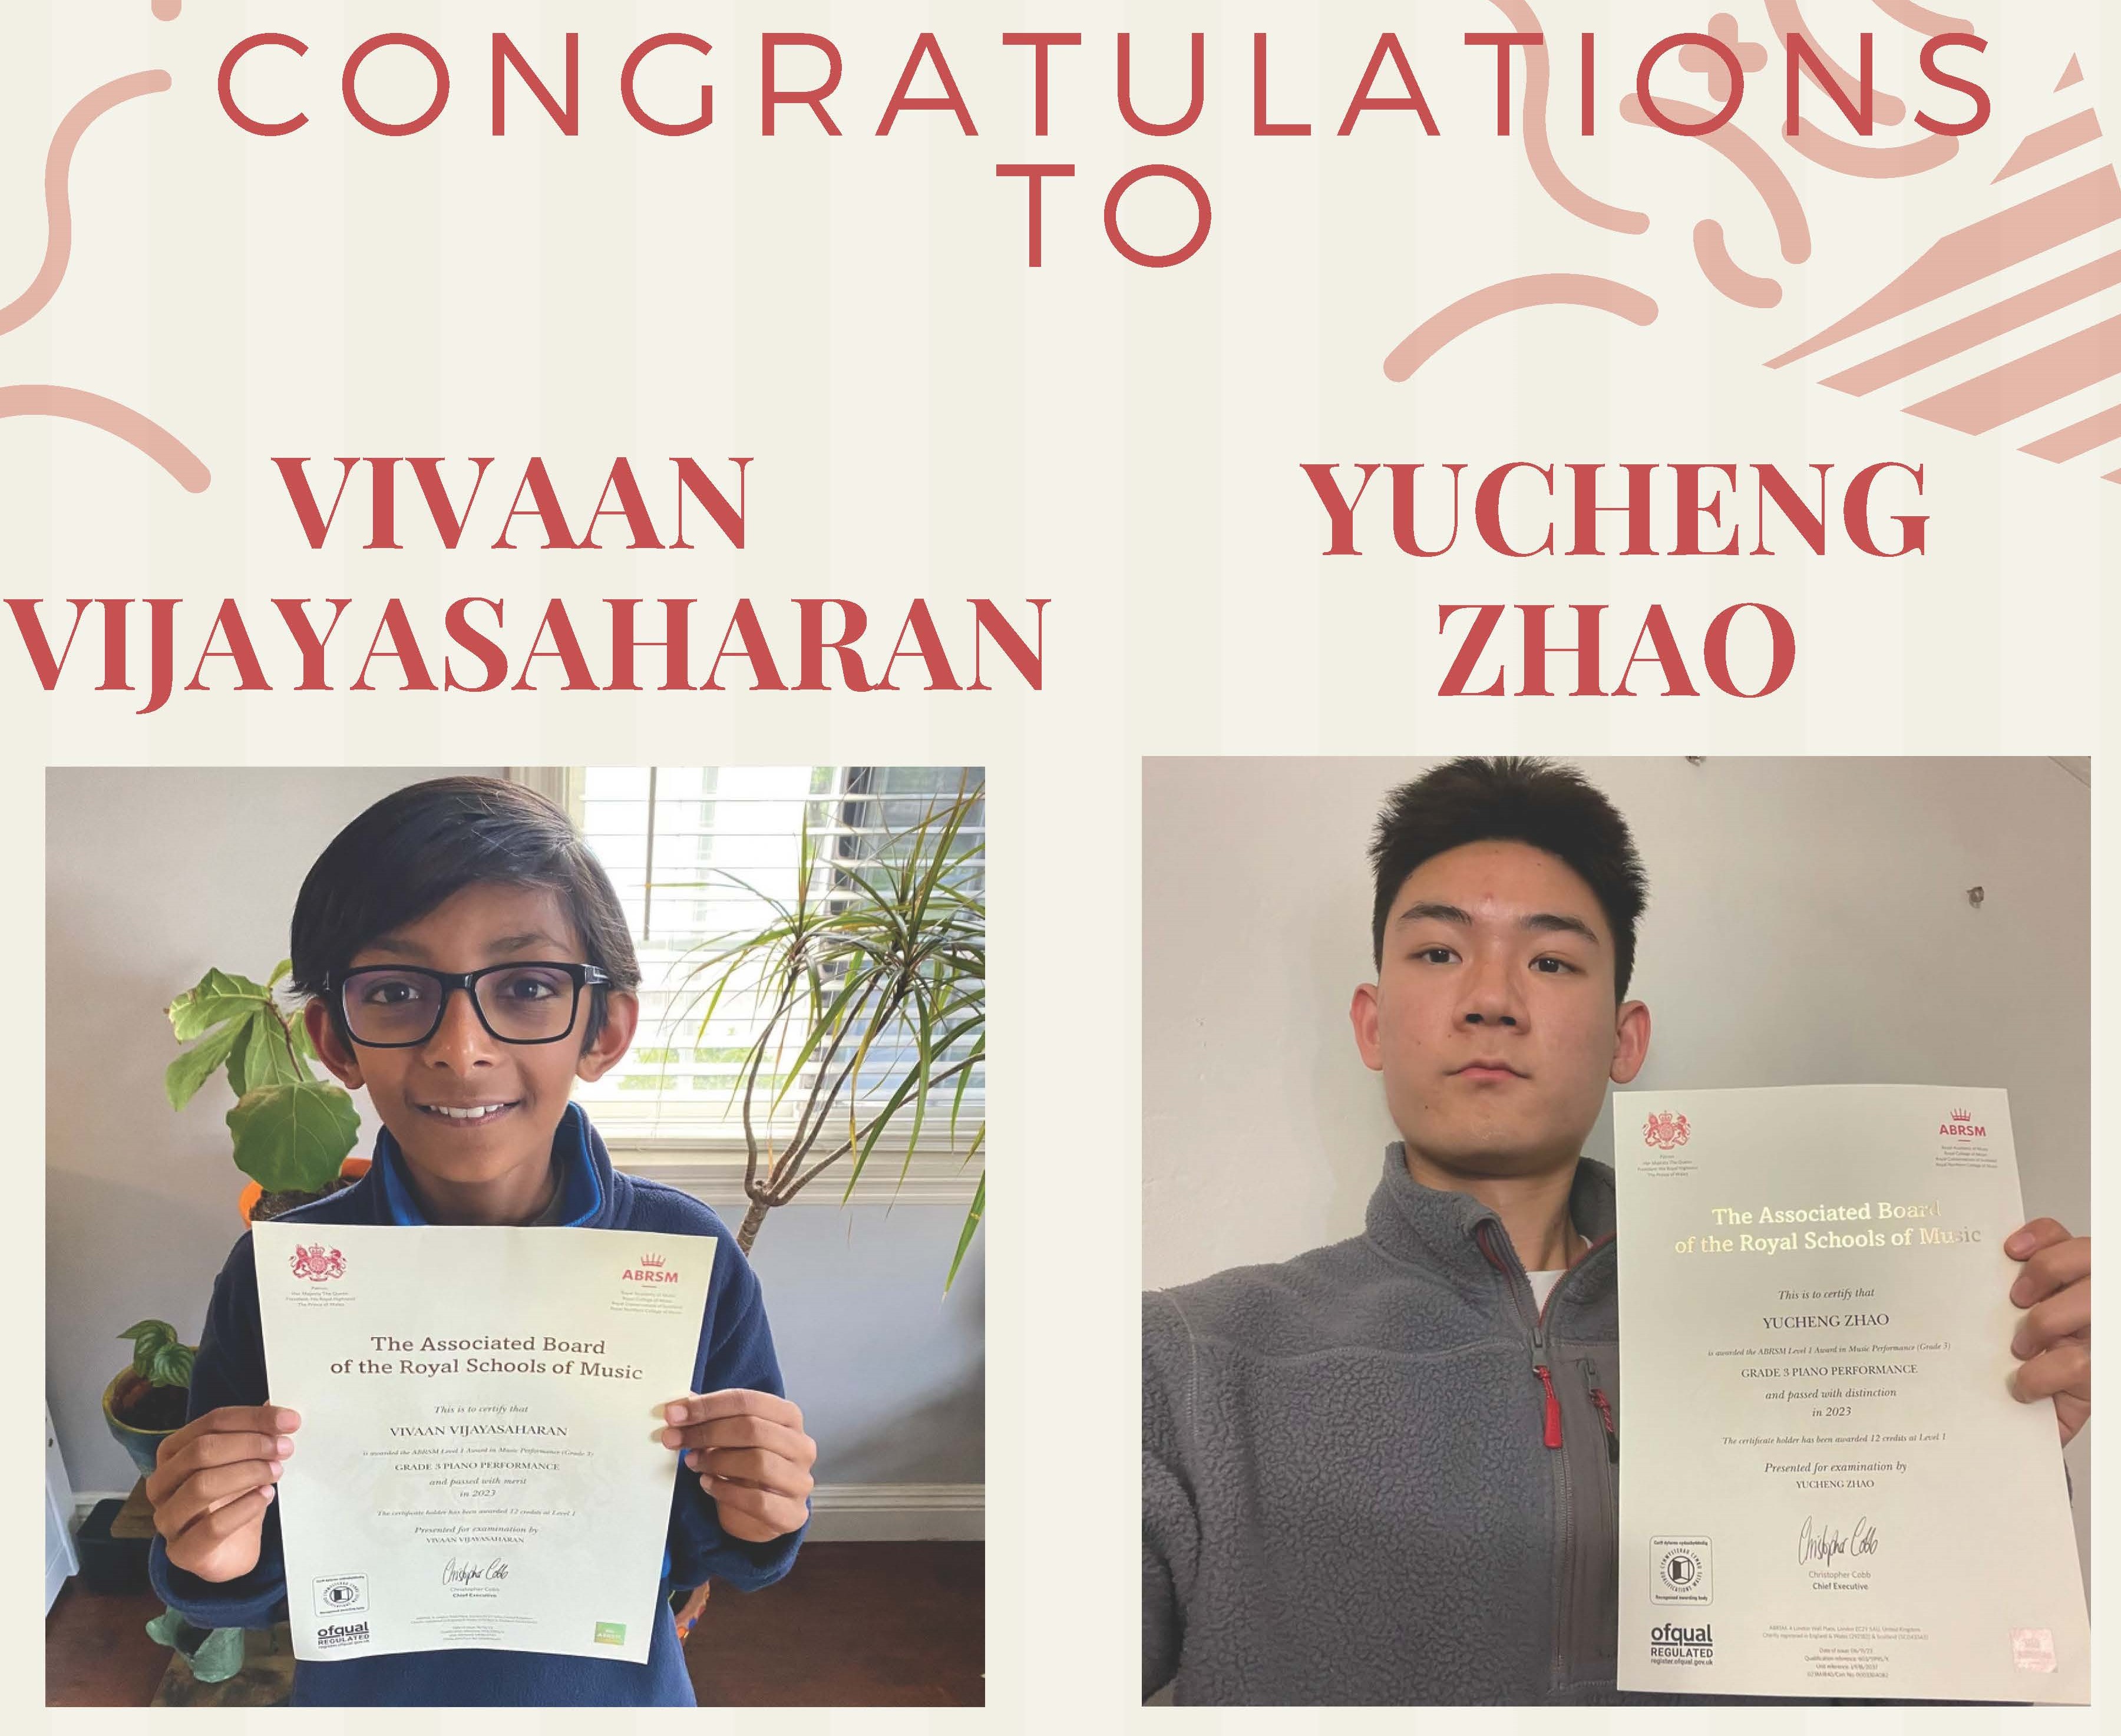 Poster: Congratulations to Vivaan Vijayasaharan and Yucheng Zhao!